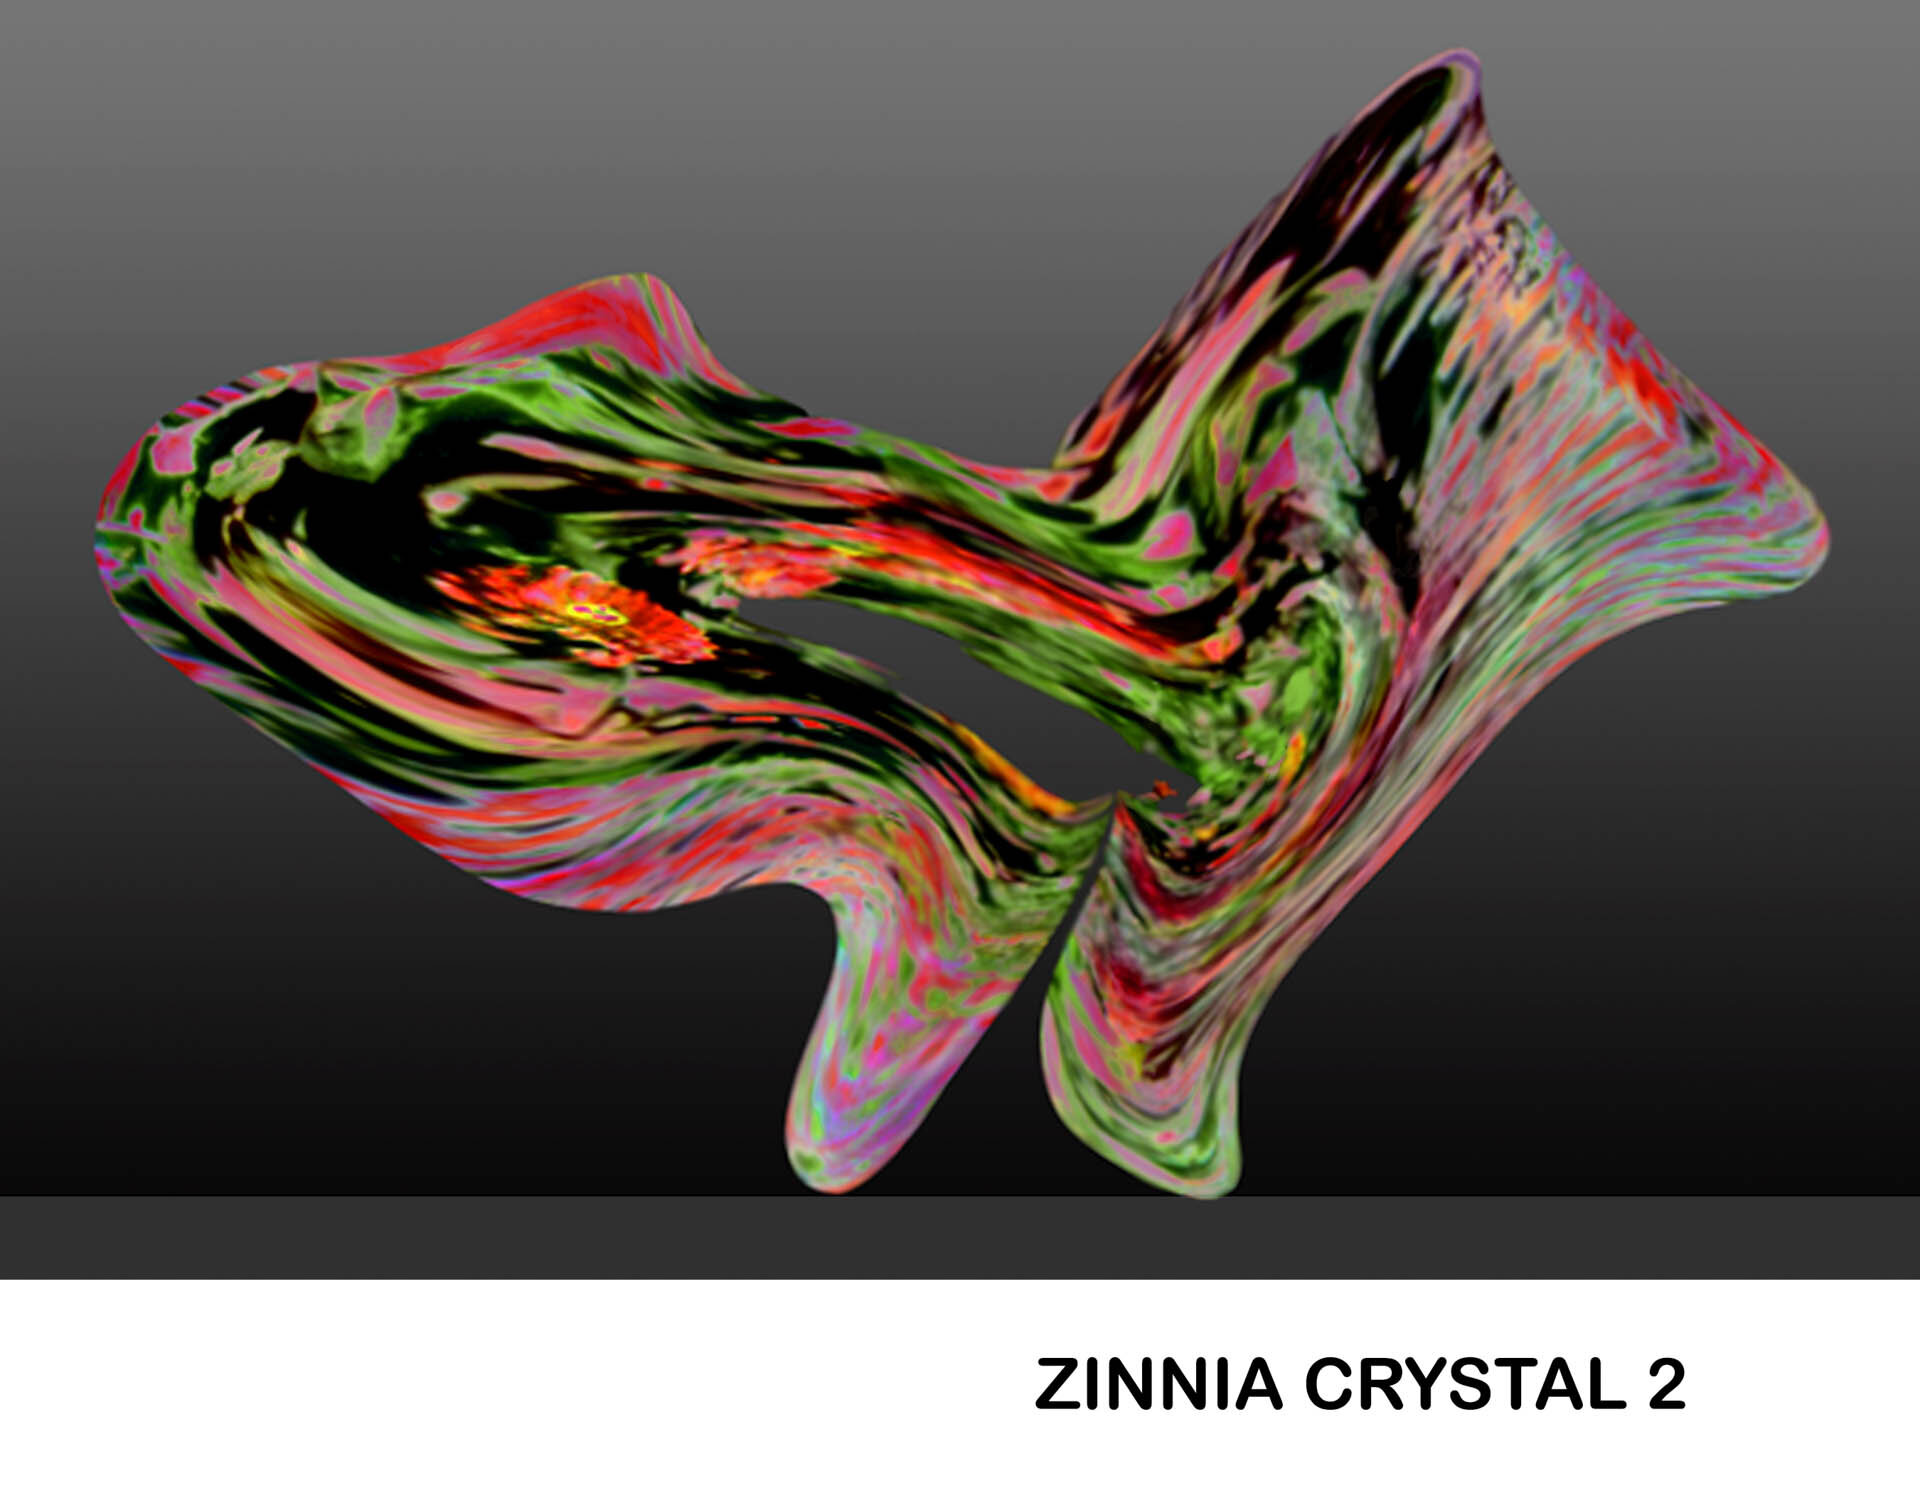 Zinnia Crystal 2 Titled.jpg